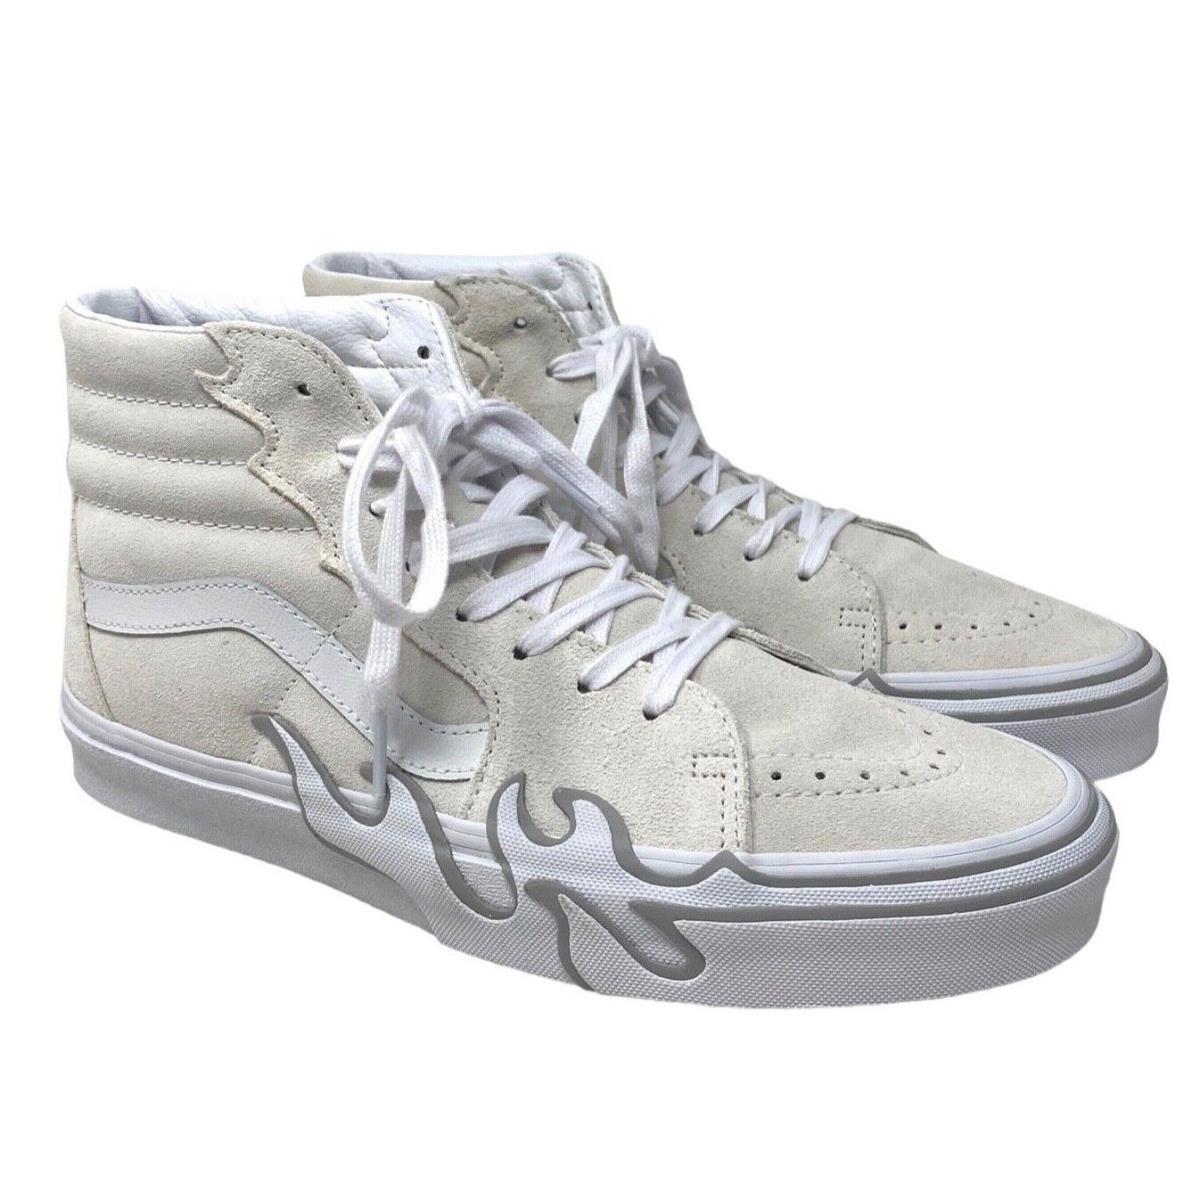 Vans Sk8-Hi Flame Suede Shoes Skate White Gray Sneakers Men`s Size VN0005UJWWW